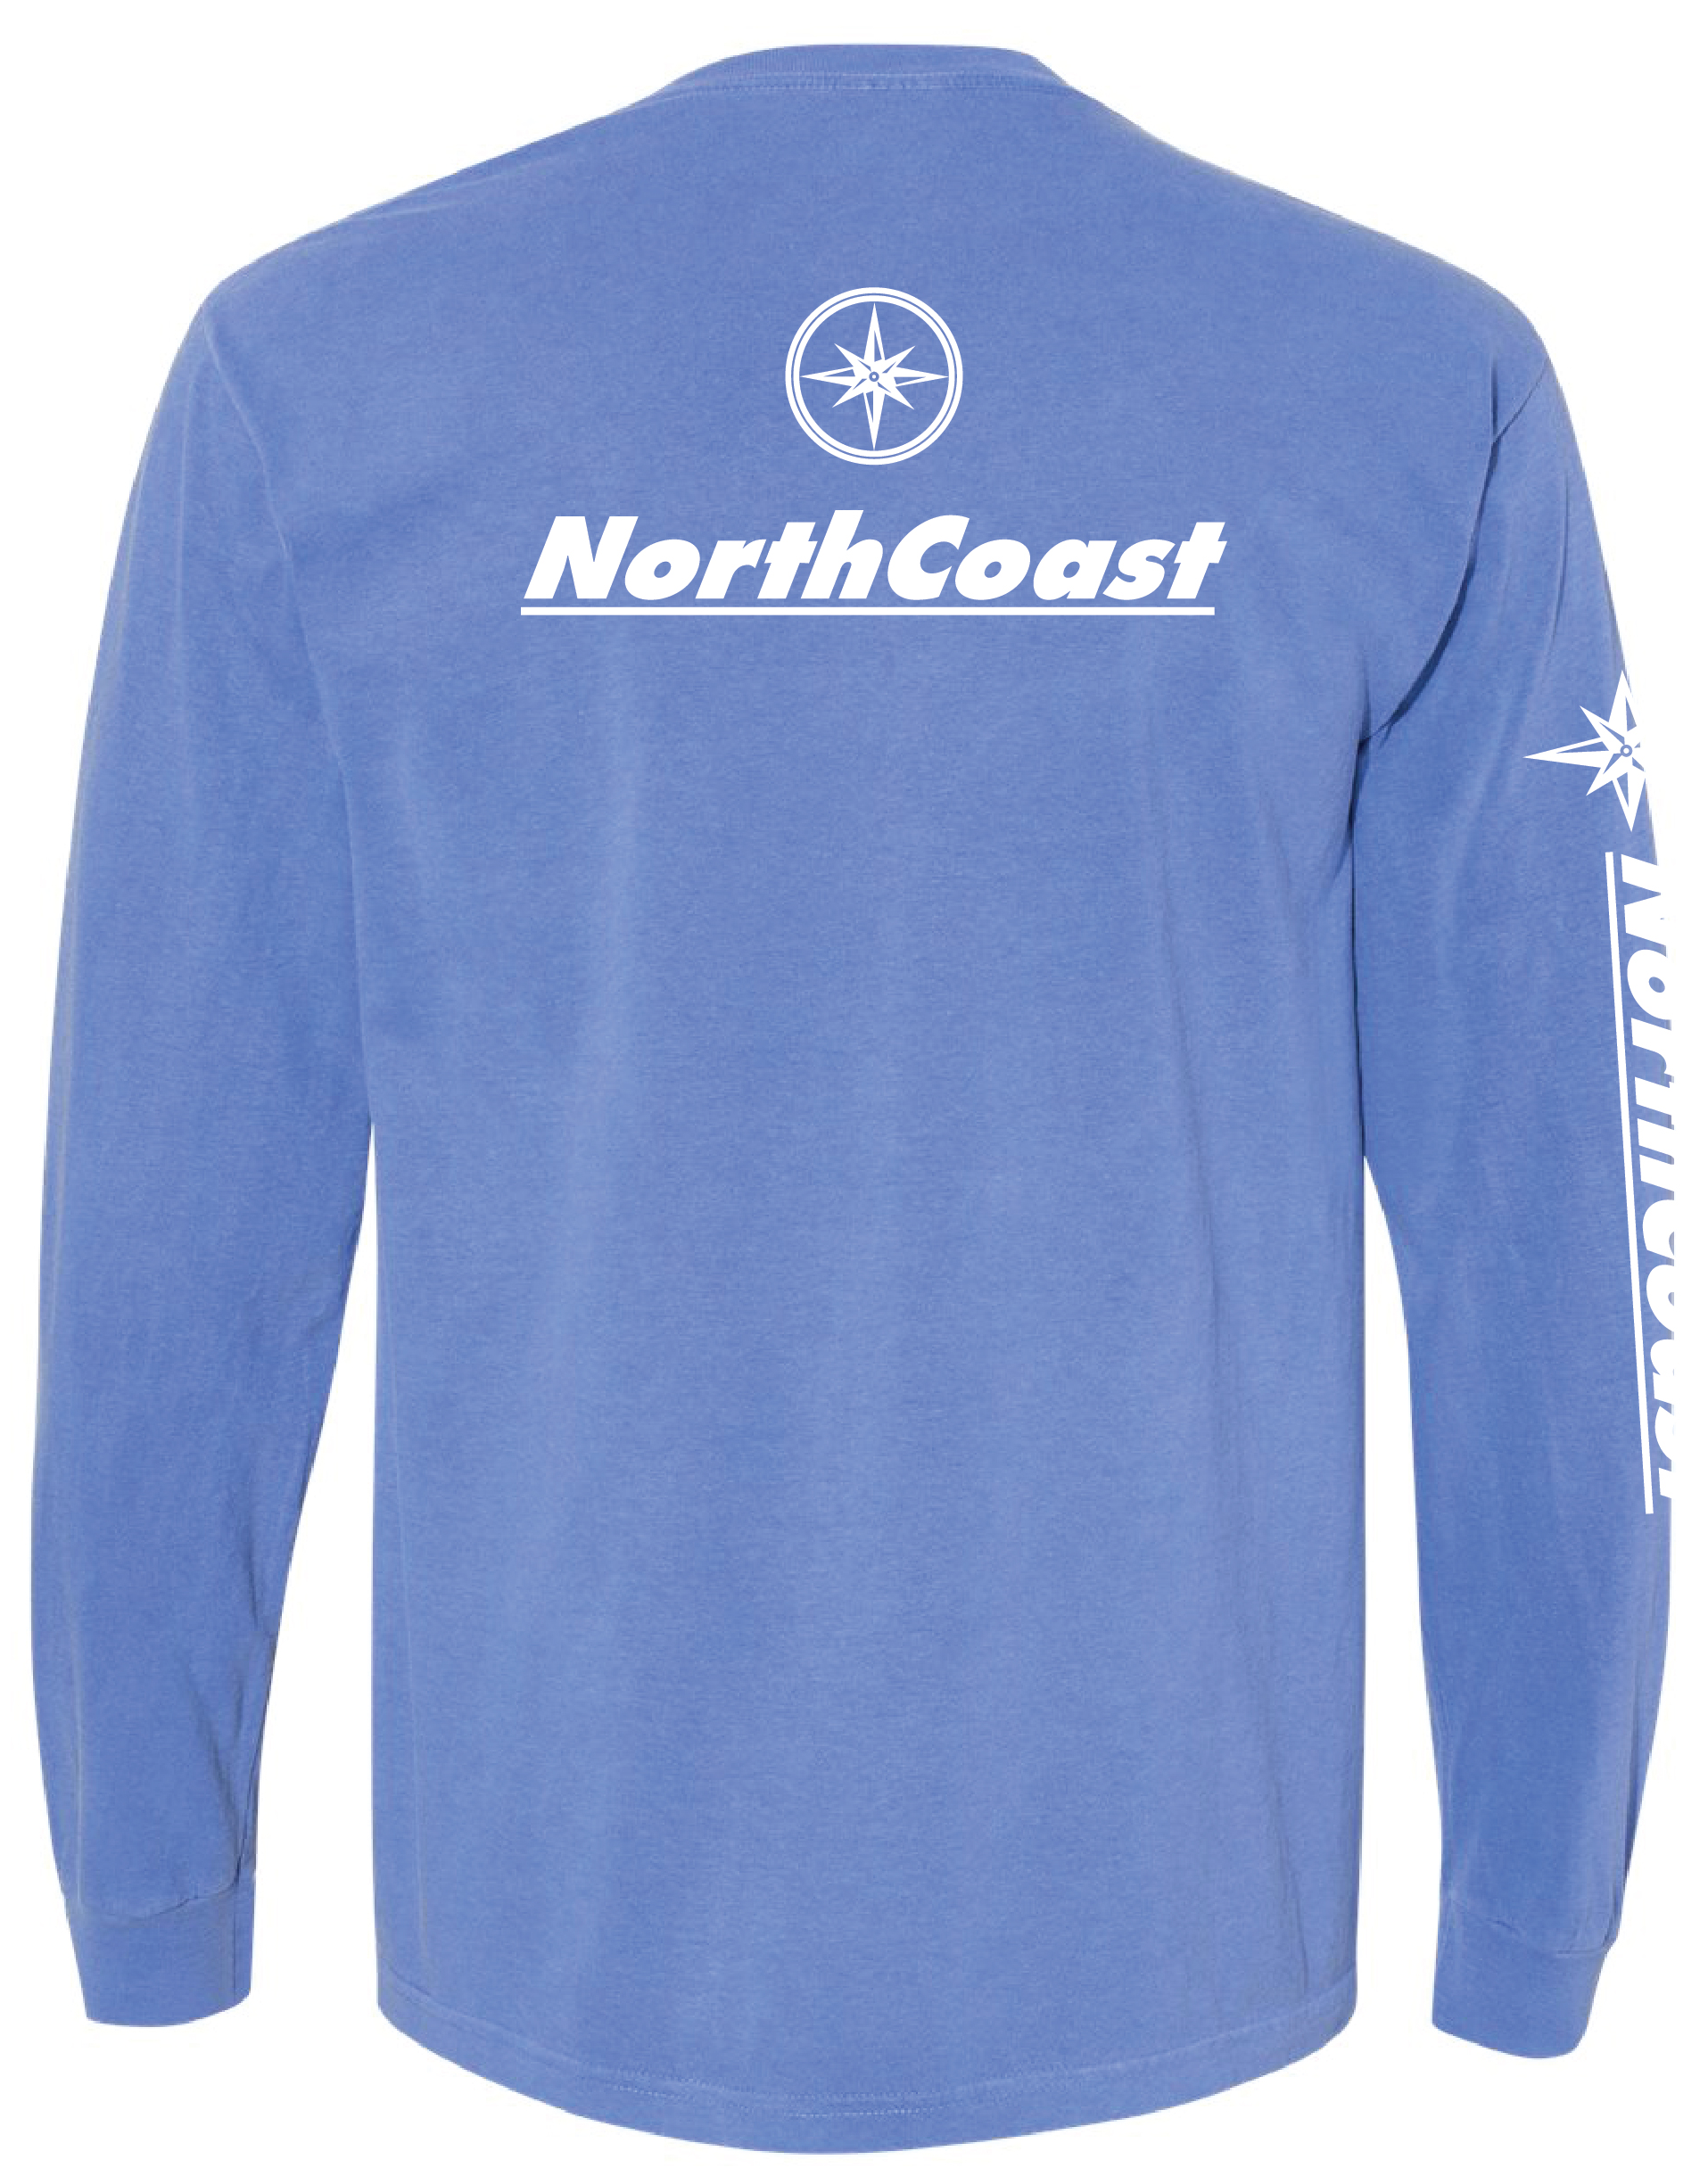 NorthCoast Boats Long Sleeve T-Shirt - Blue